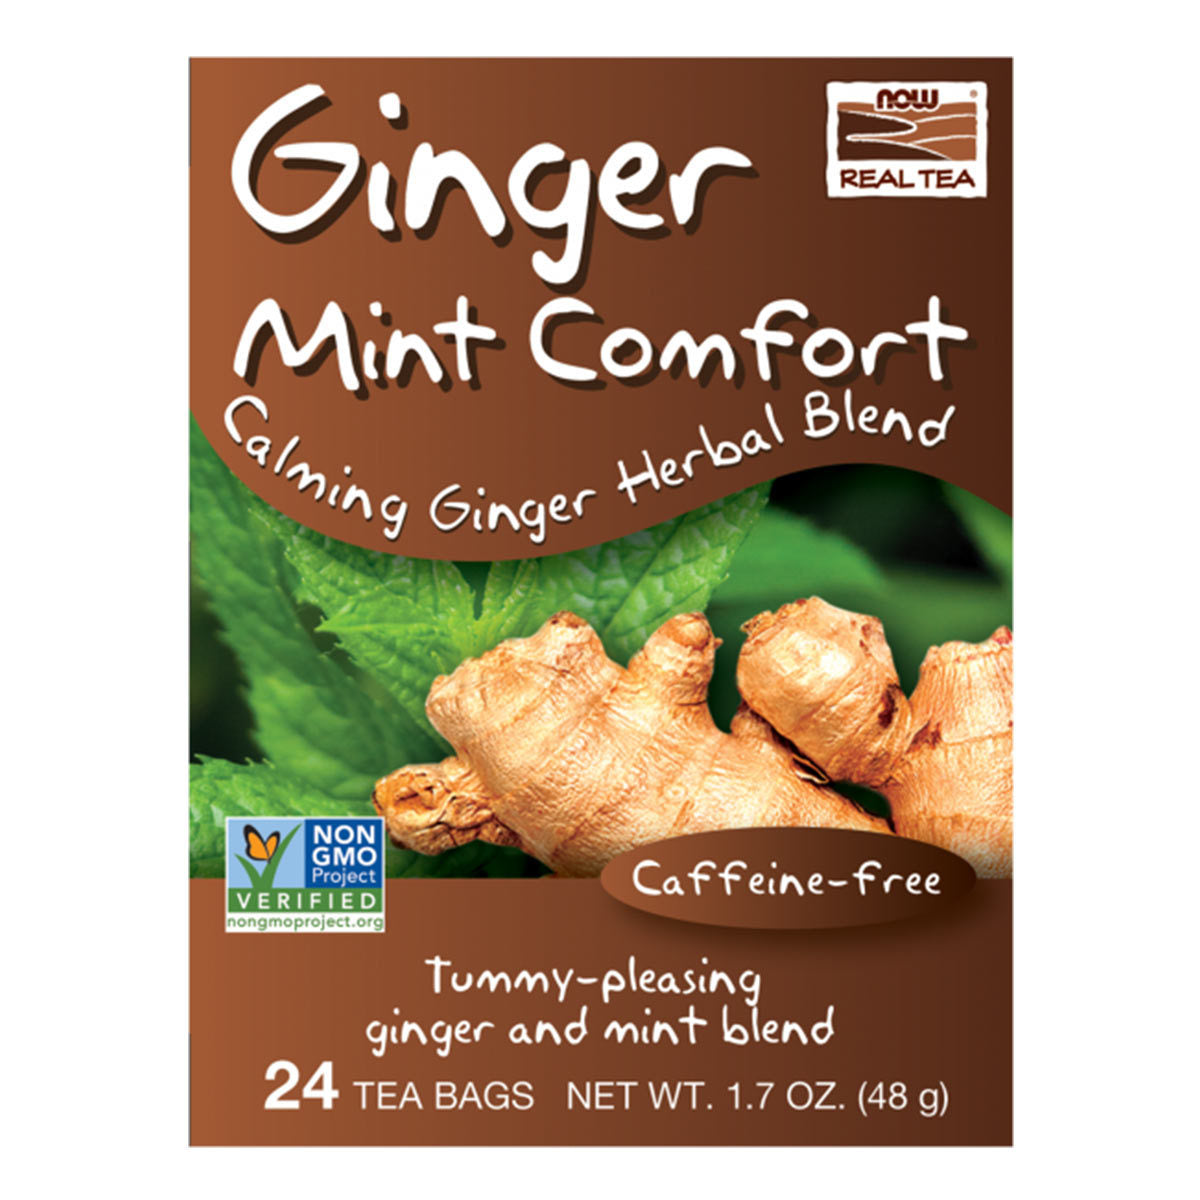 Primary image of Ginger Mint Comfort Tea